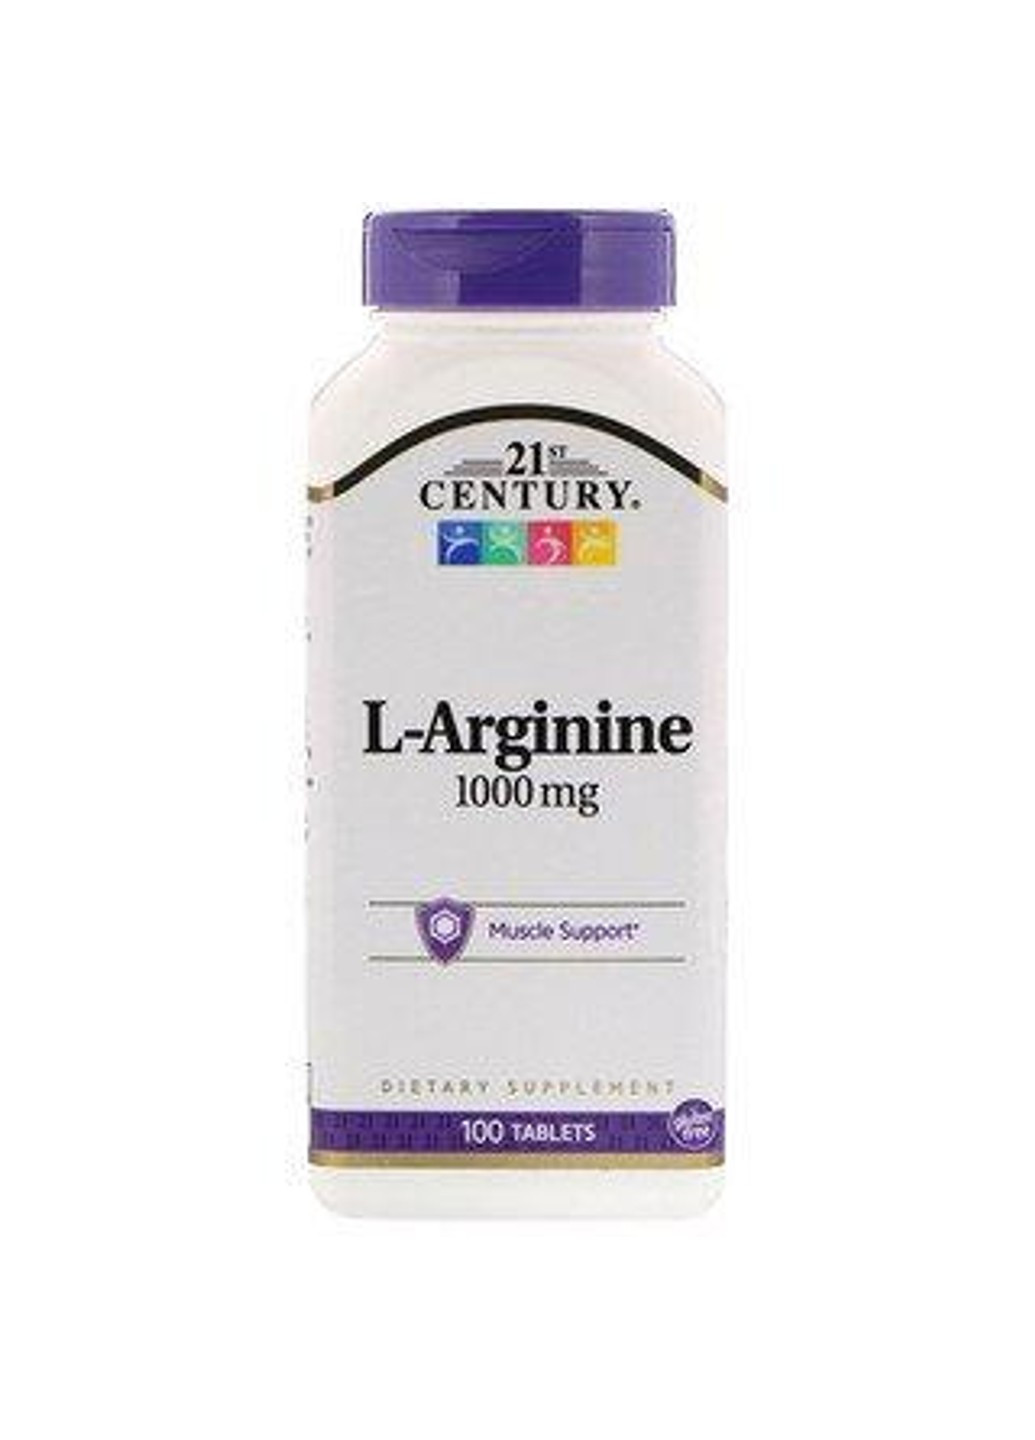 Л-Аргинин L-Arginine 1000 mg (100 таблеток) 21 век центури 21st Century (255363252)